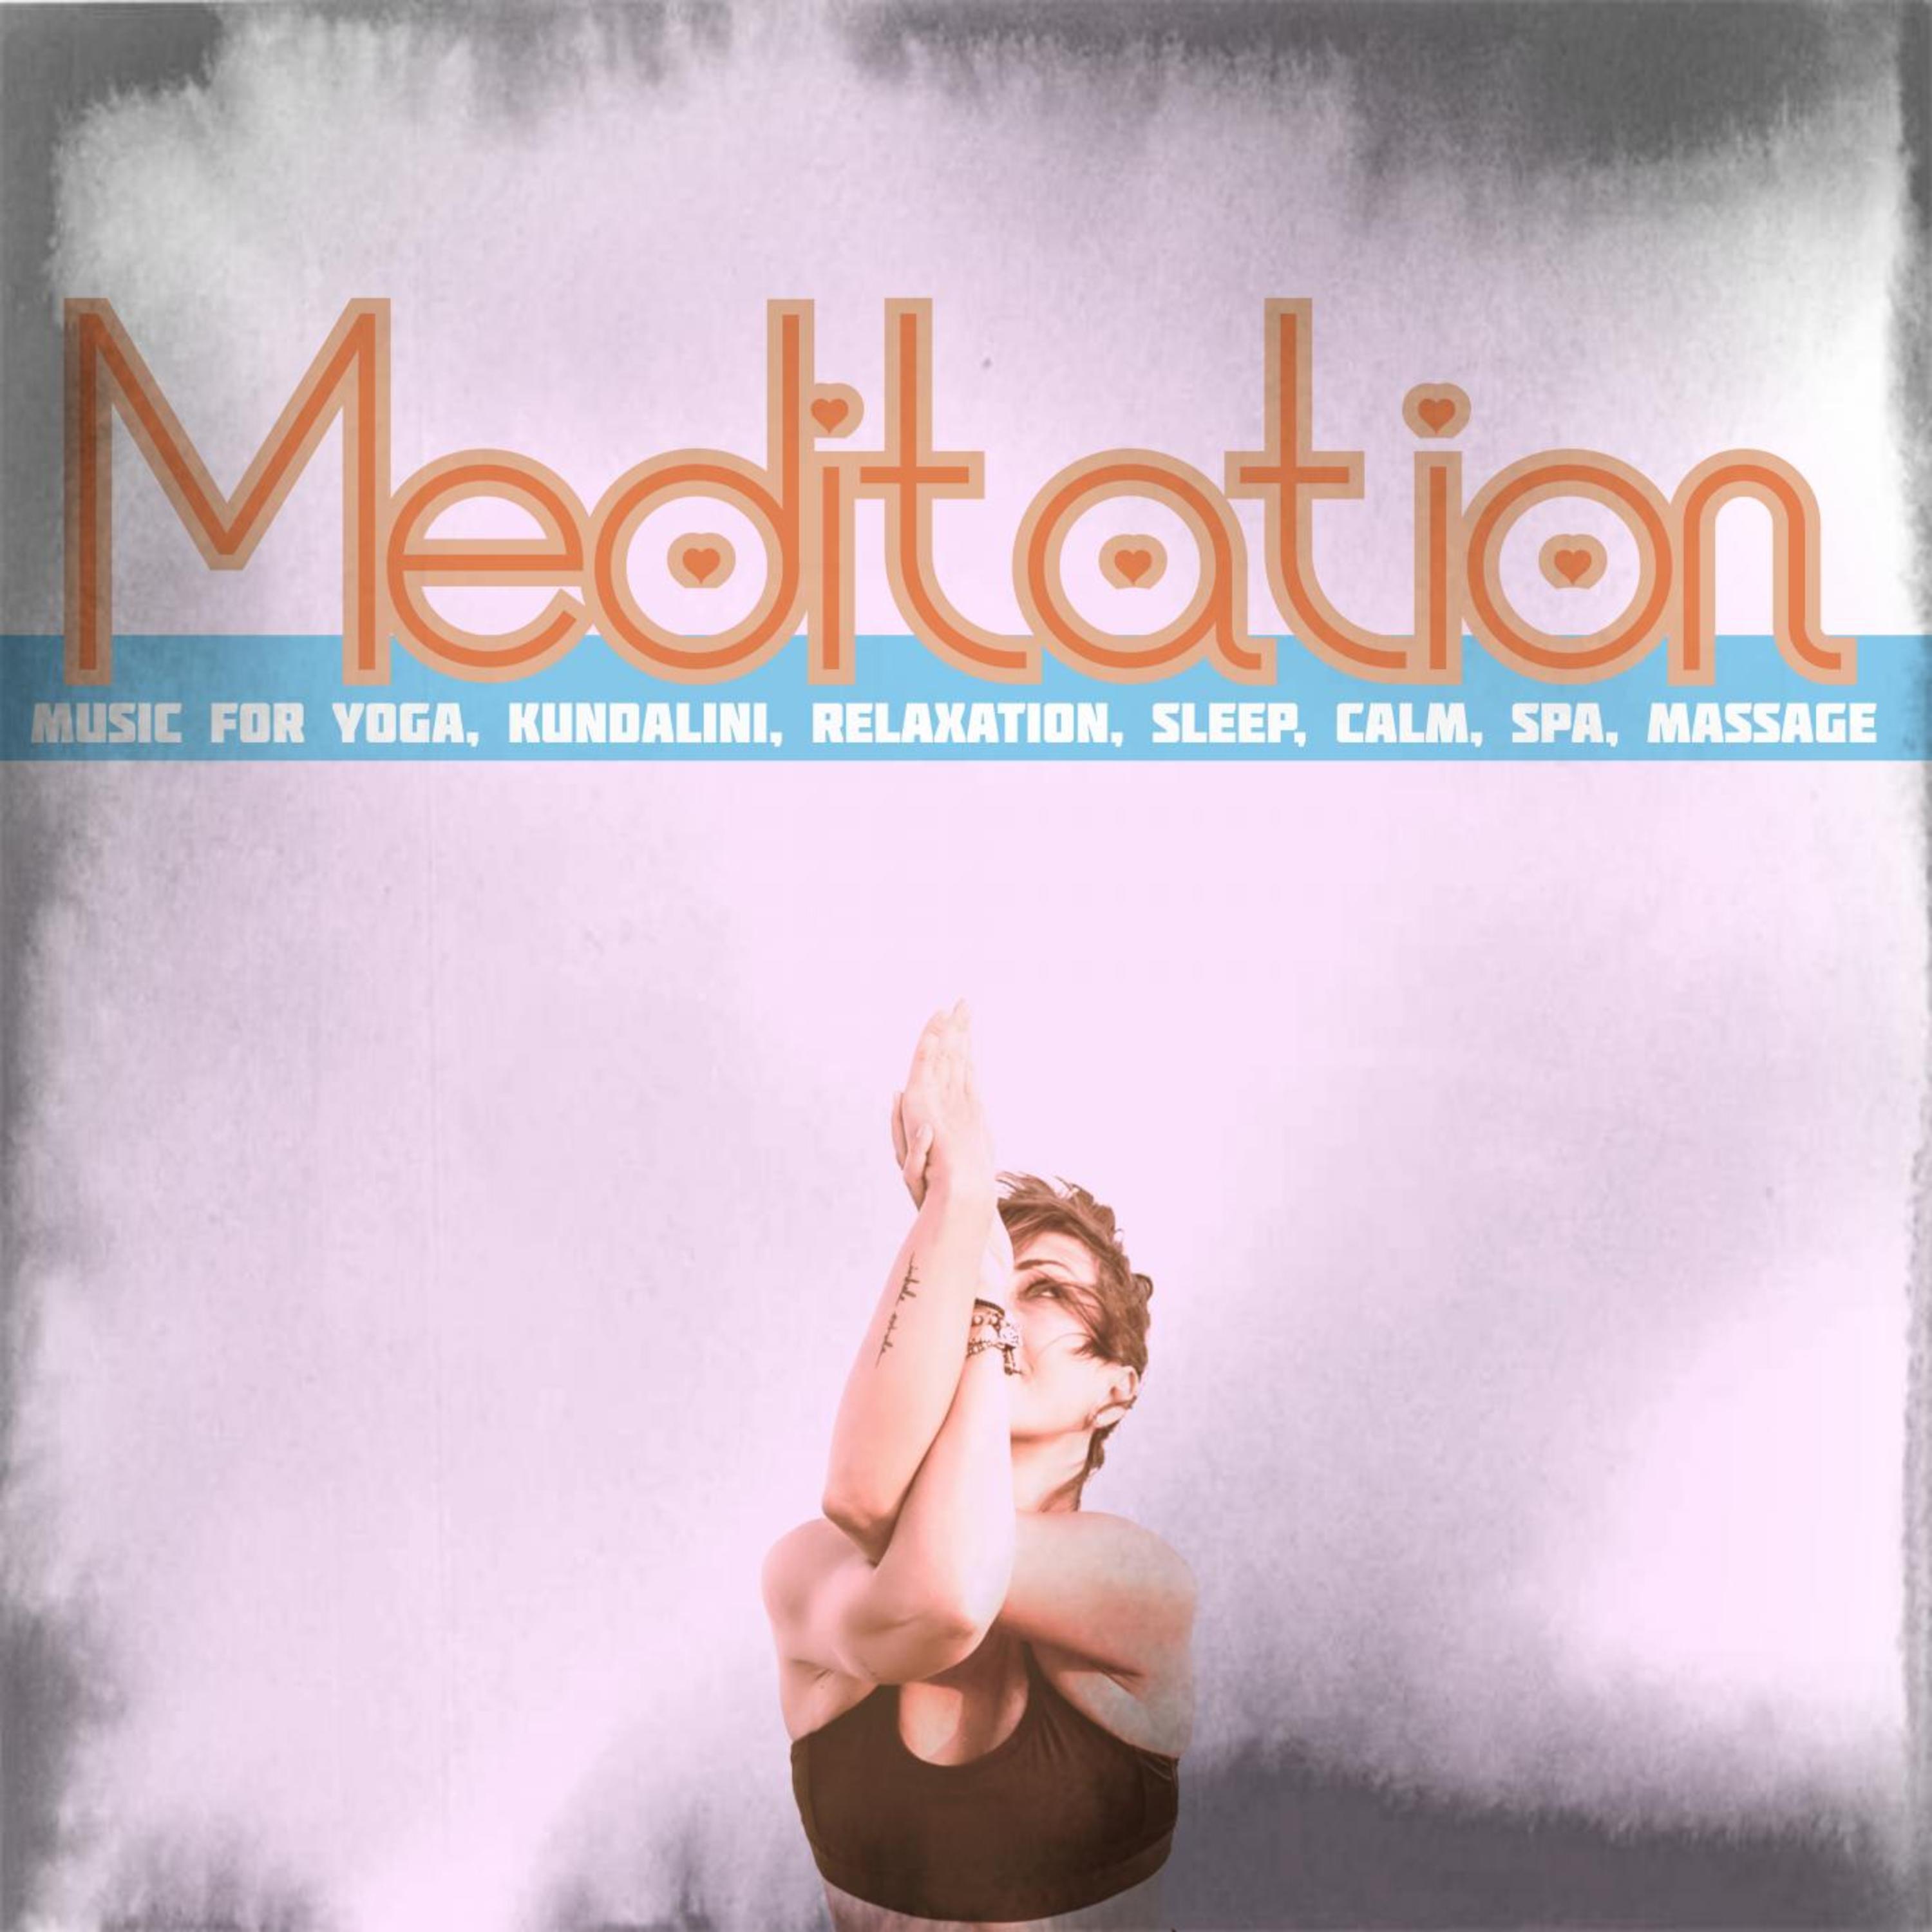 Meditation: Music for Yoga, Kundalini, Relaxation, Sleep, Calm, Spa, Massage